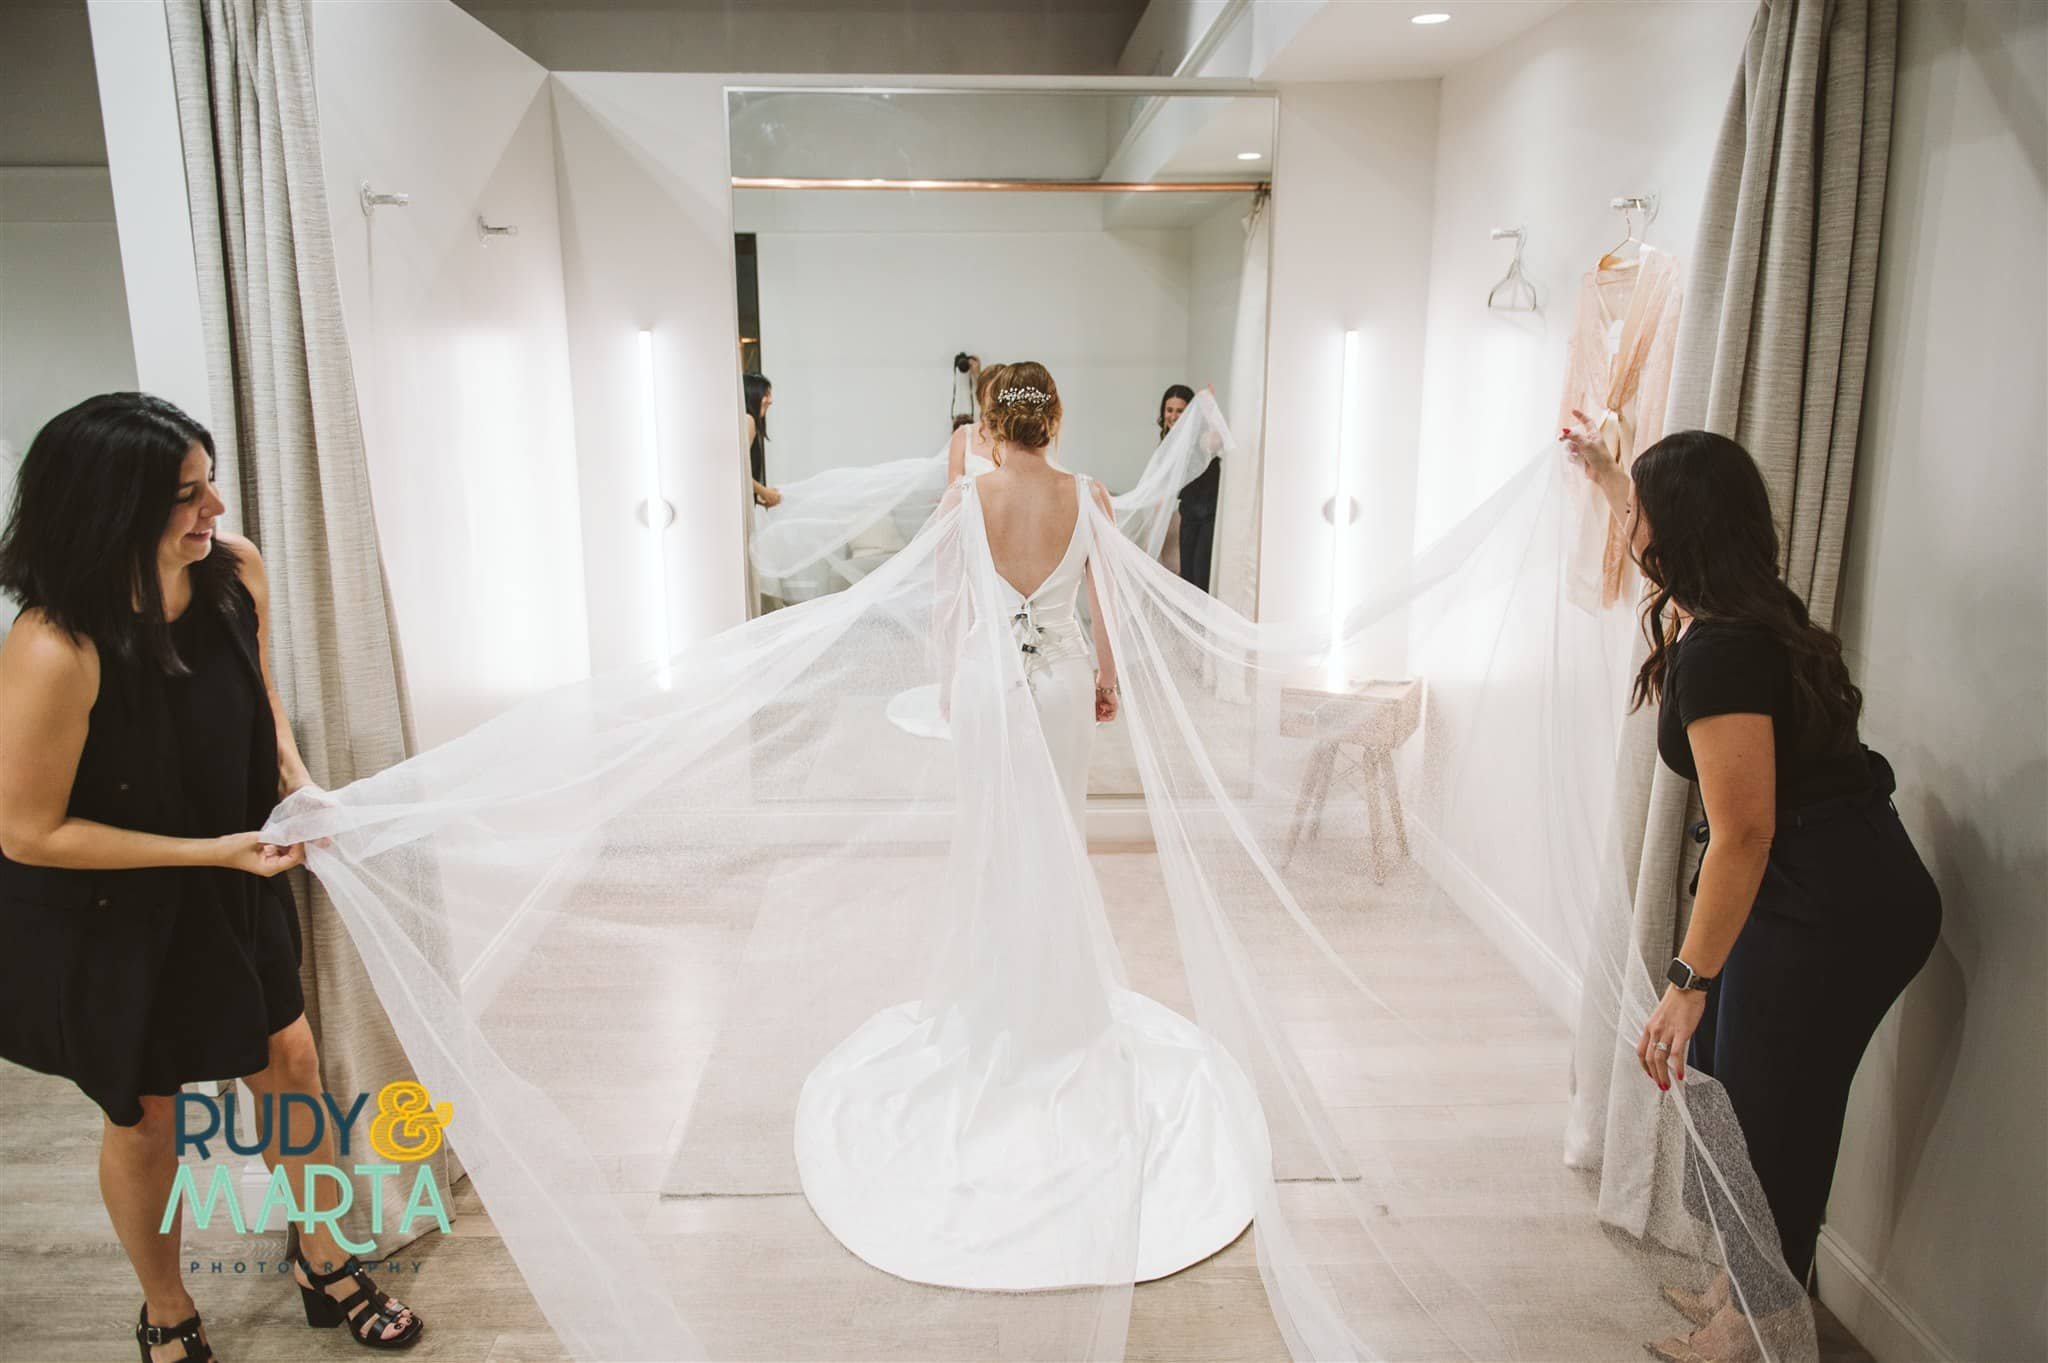 Luxury Wedding Dresses - Orlando's Bridal Shop - Bridal Gallery